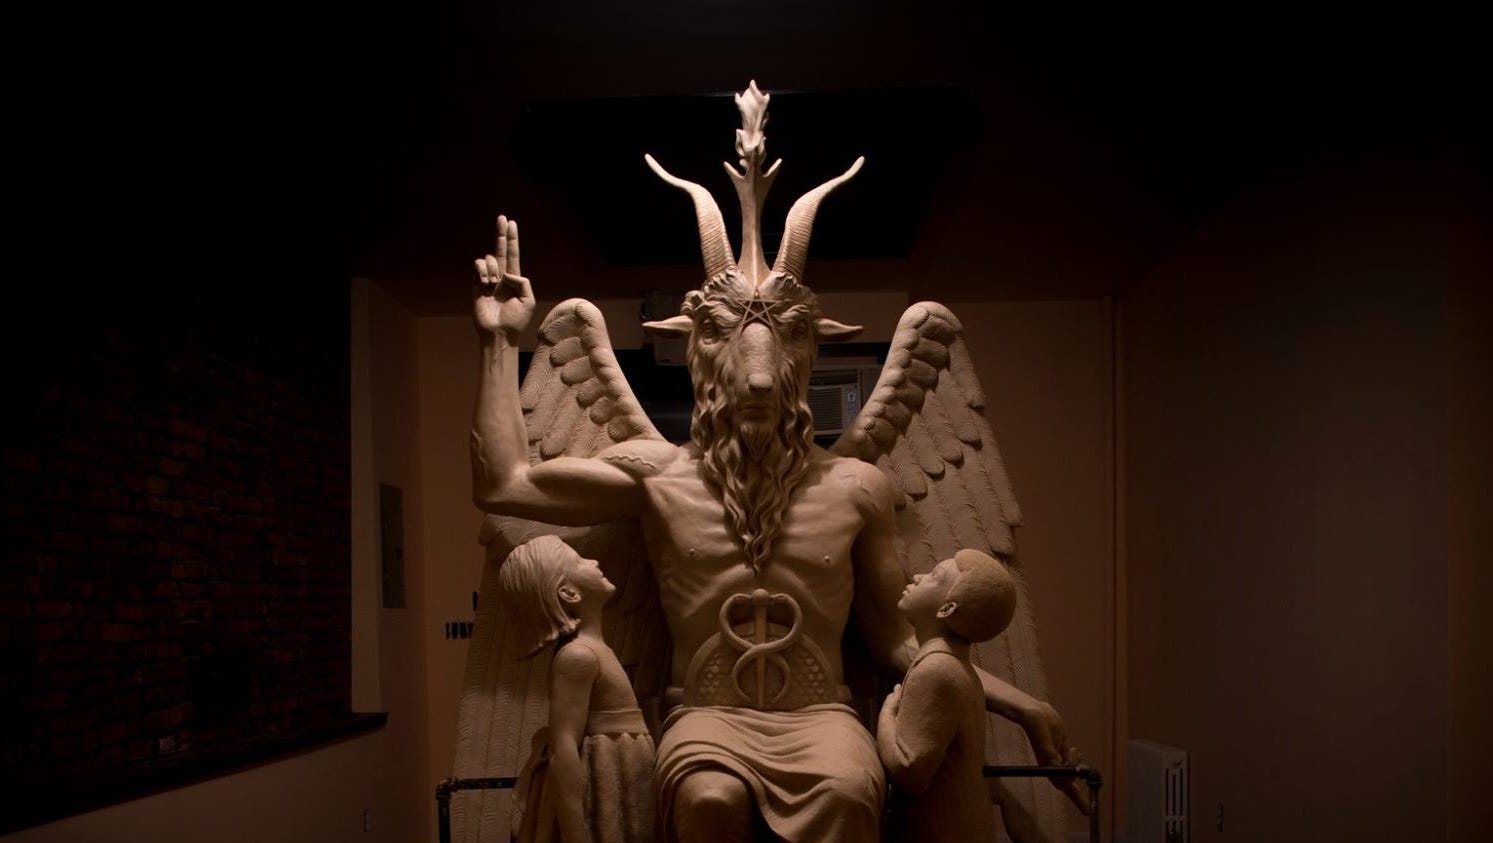 Руки шайтана. Бафомет статуя. Бафомет дьявол статуя. Идол Бафомет. Статуя Бафомета 3м в Детройте.